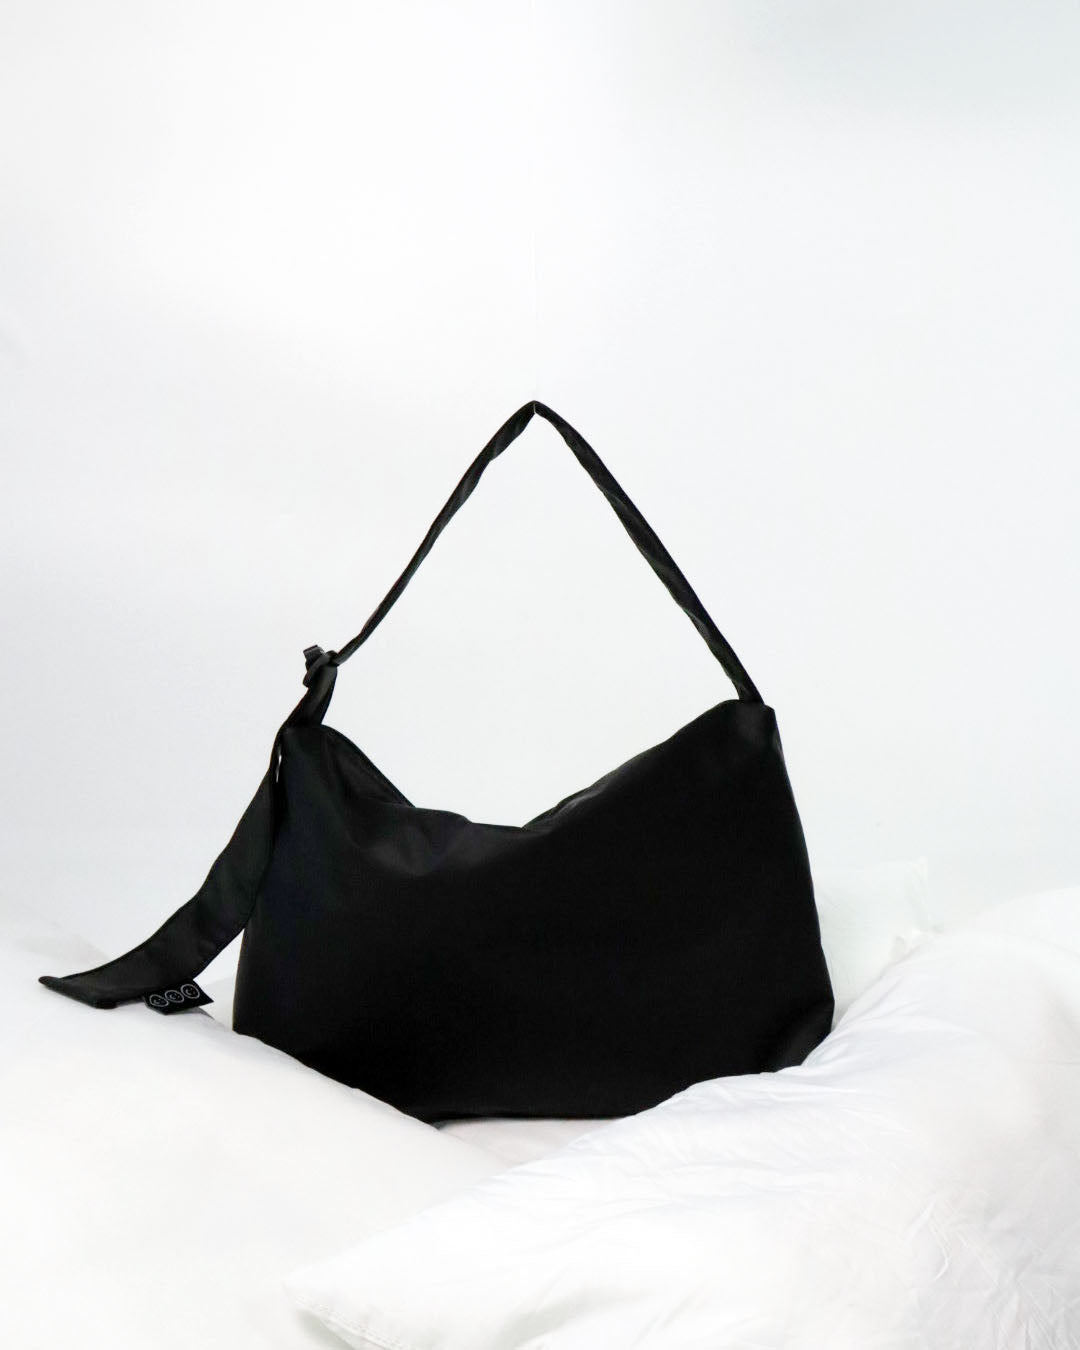 Signature ZZZ Pillow Sling/Shoulder Bag in Matte Black